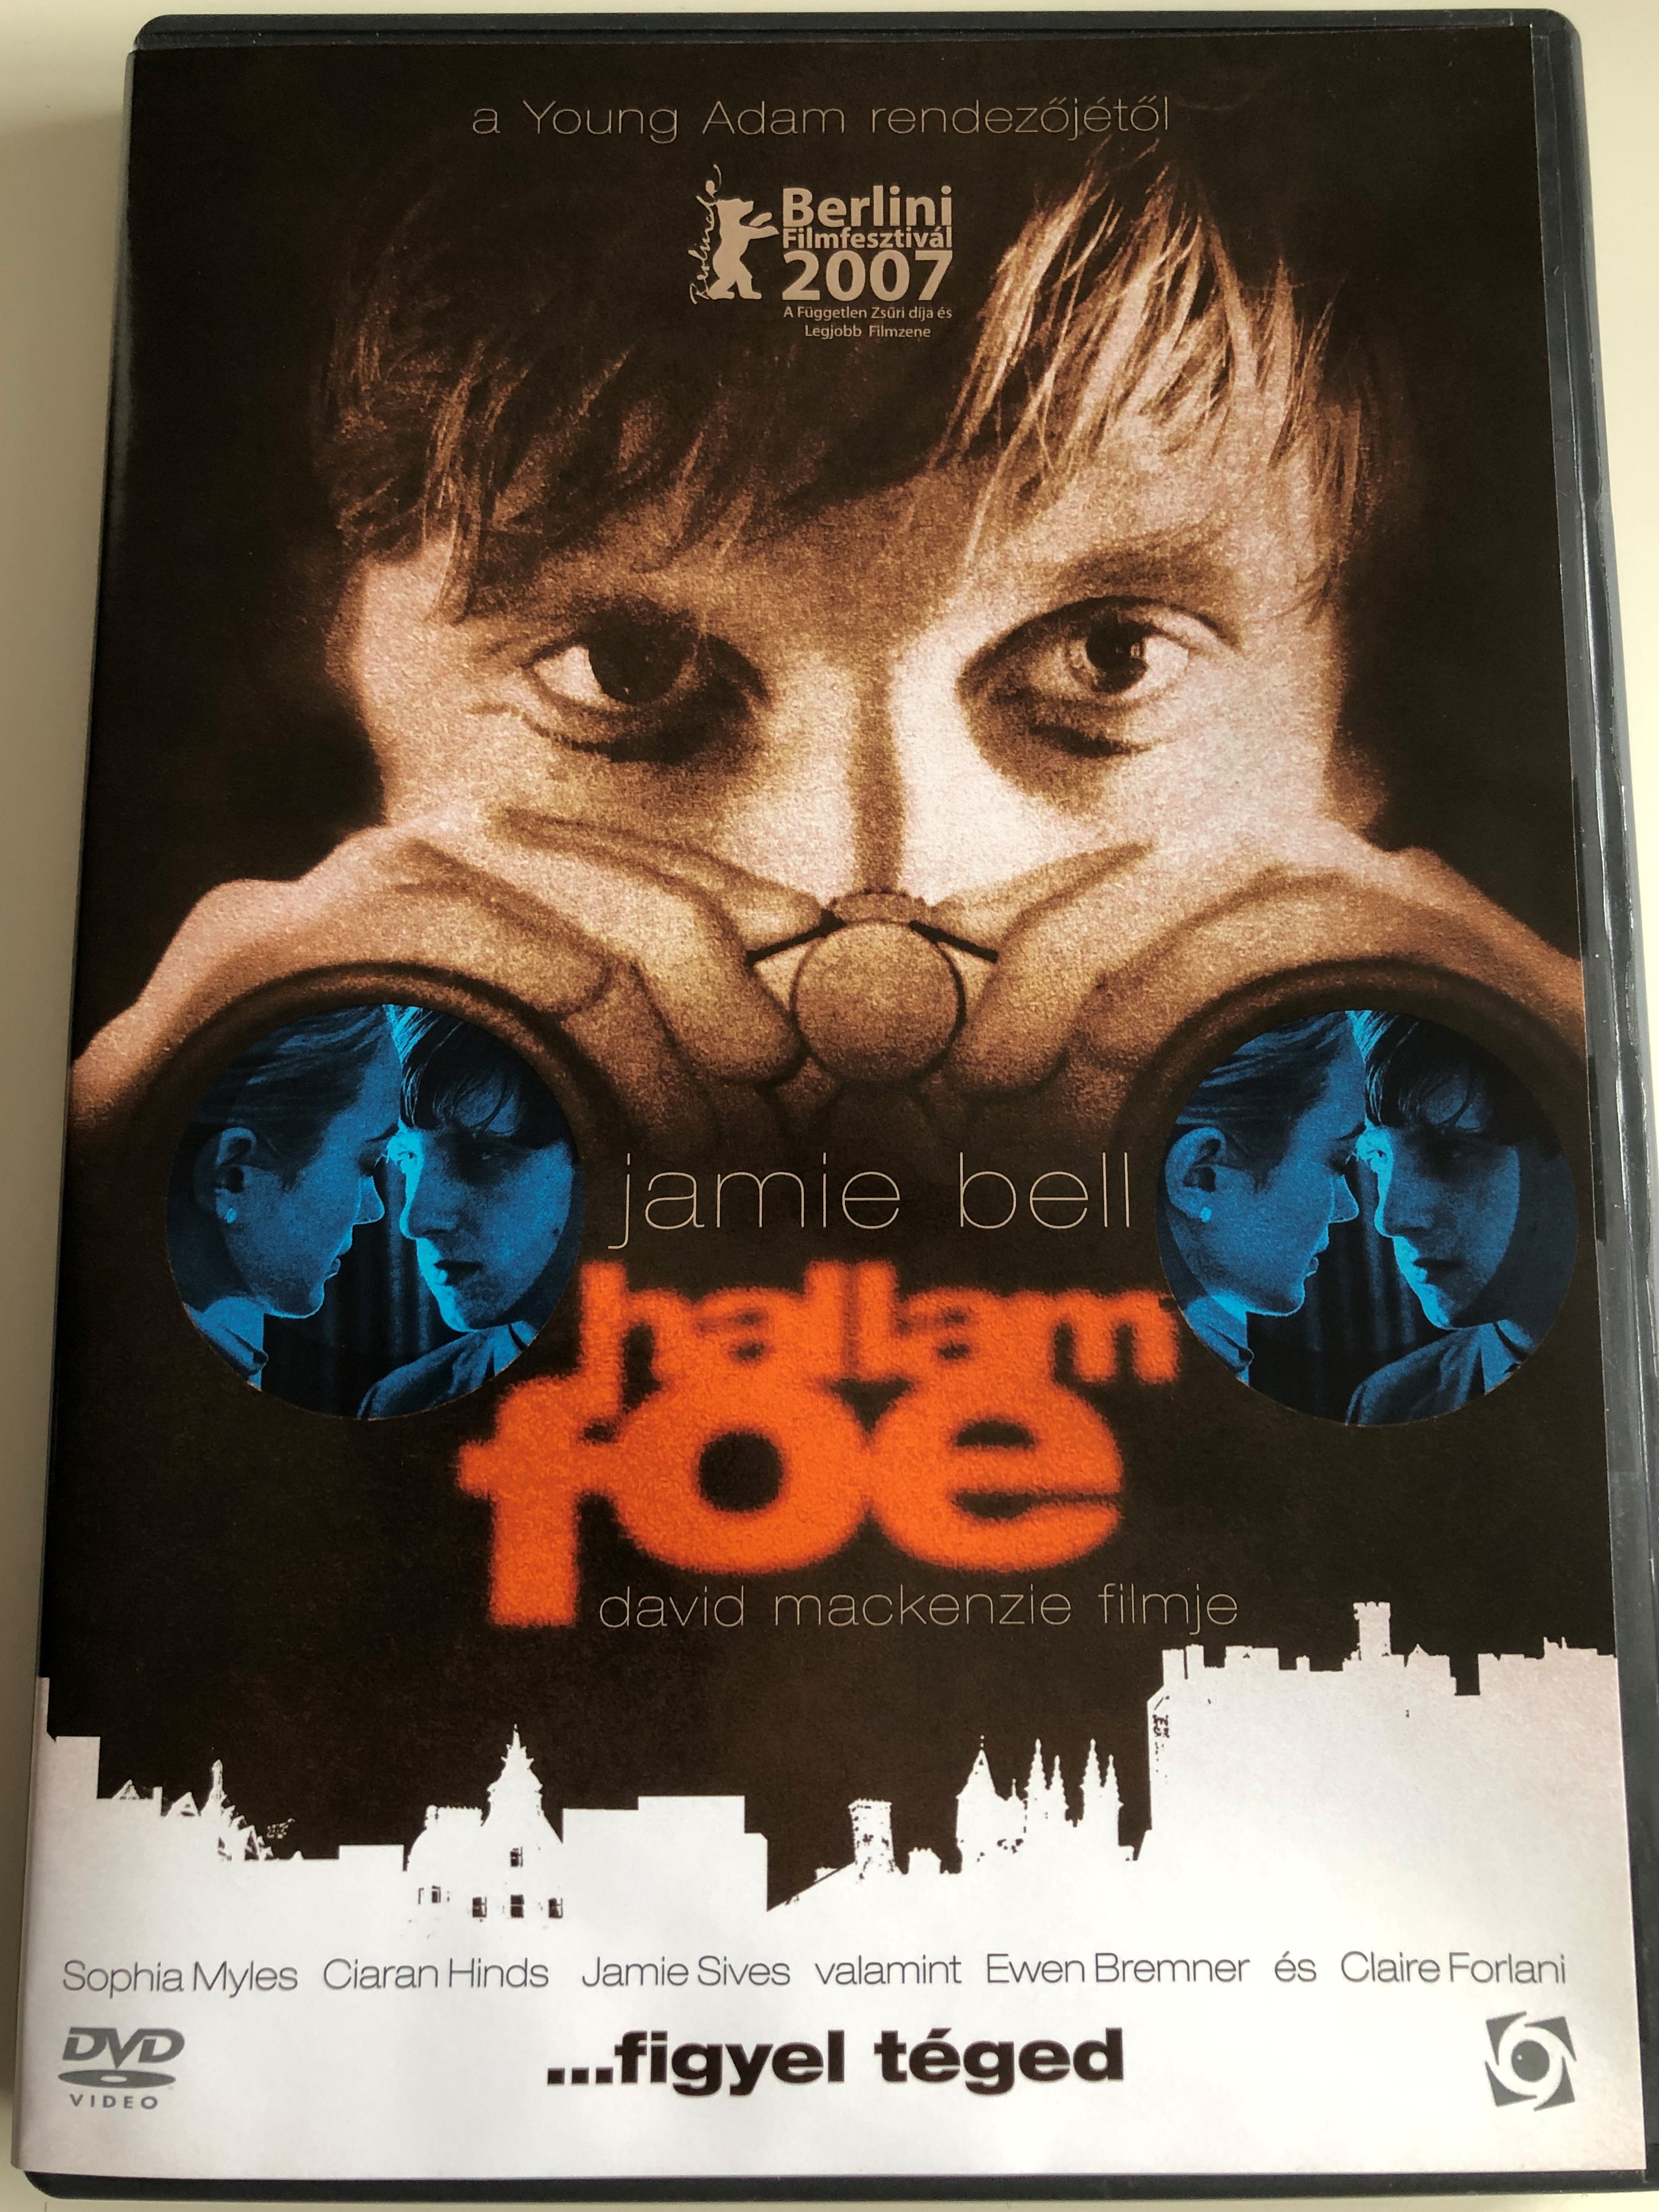 hallam-foe-dvd-2007-directed-by-david-mackenzie-1.jpg